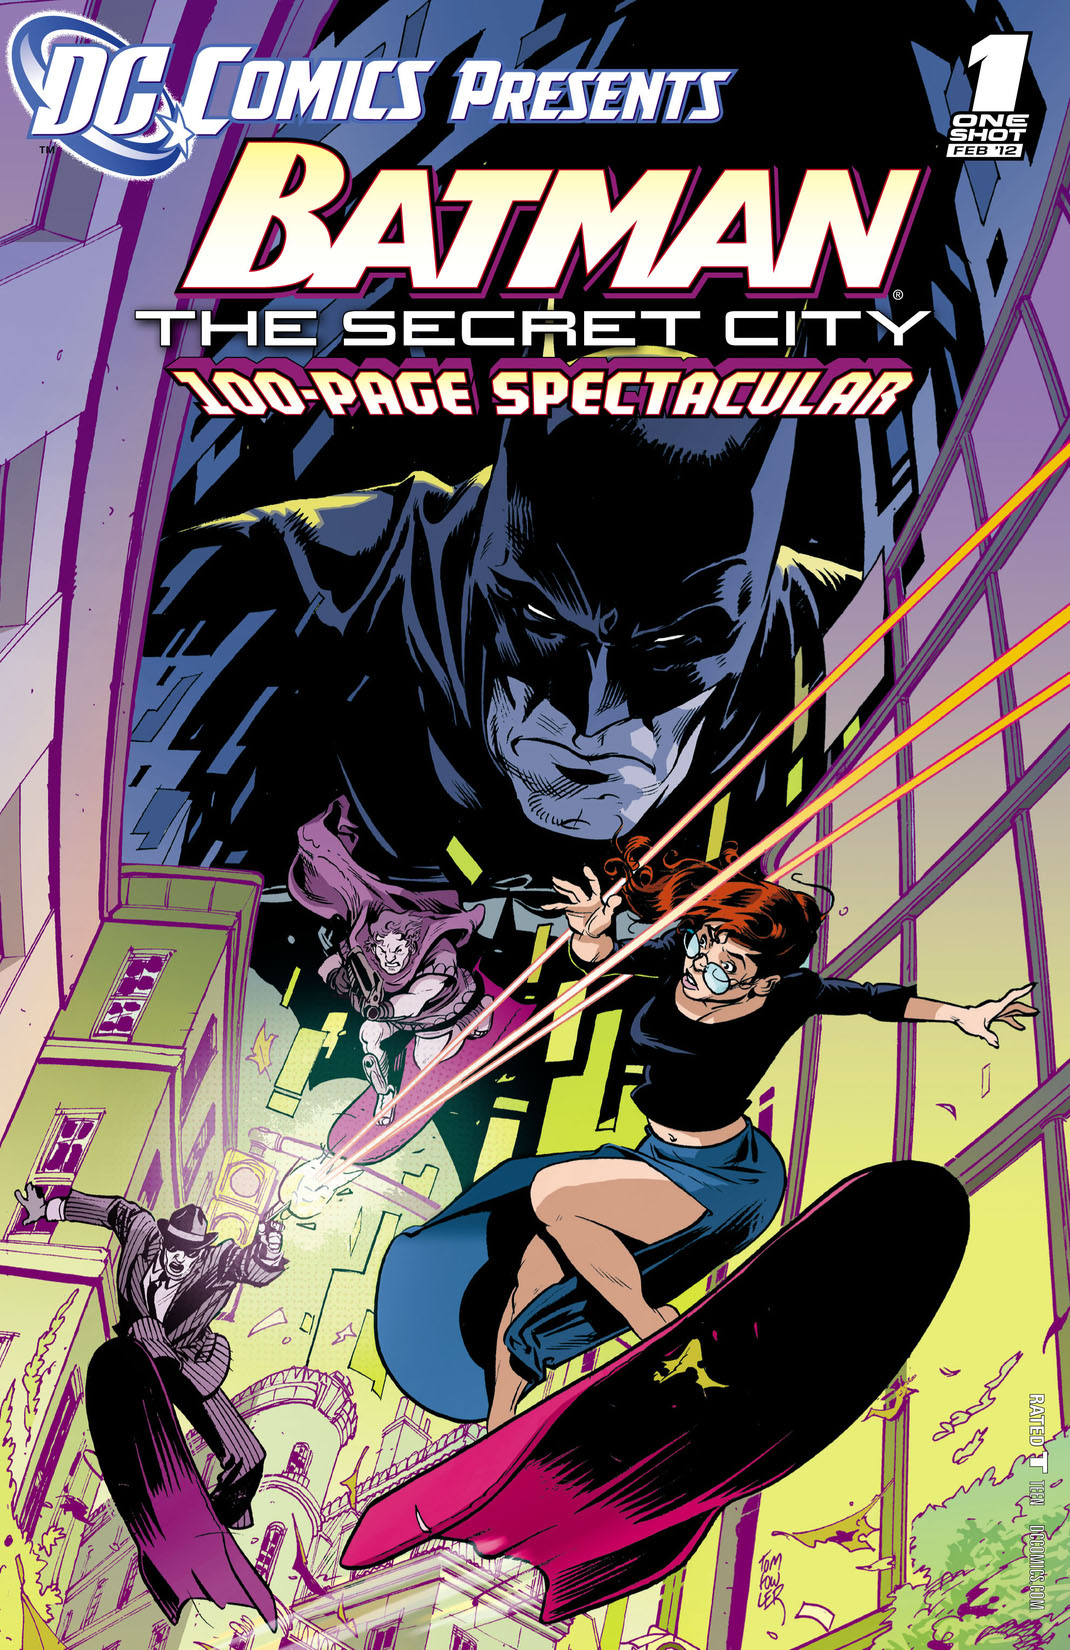 DC Comics Presents: Batman: The Secret City (2011-) #1 preview images